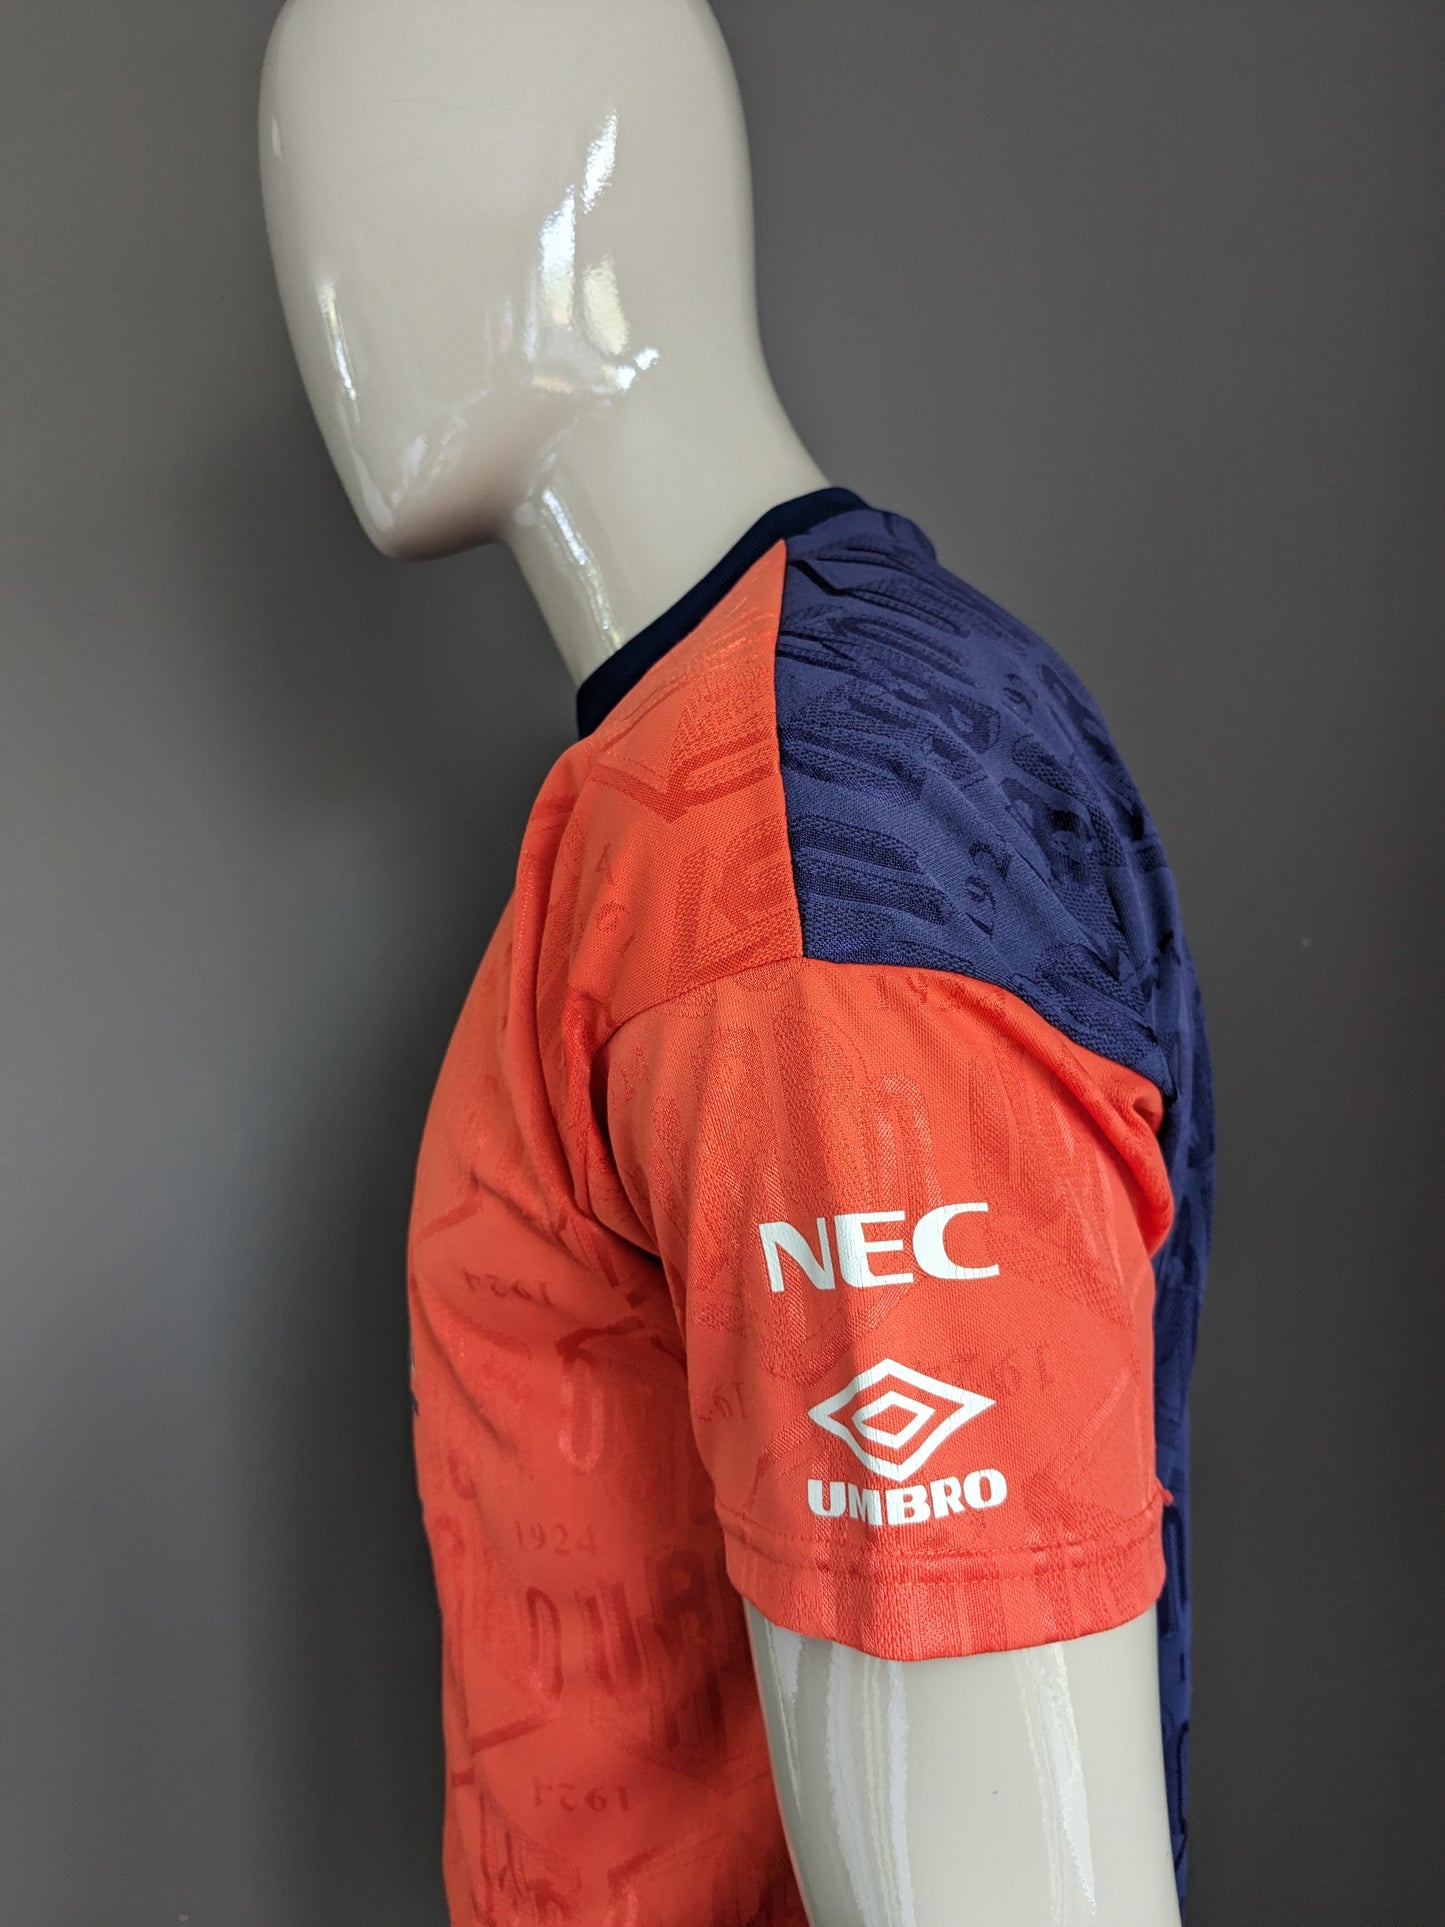 Camisa Vintage Umbro Everton Sport. Motif de color naranja azul. Tamaño (s) / L.